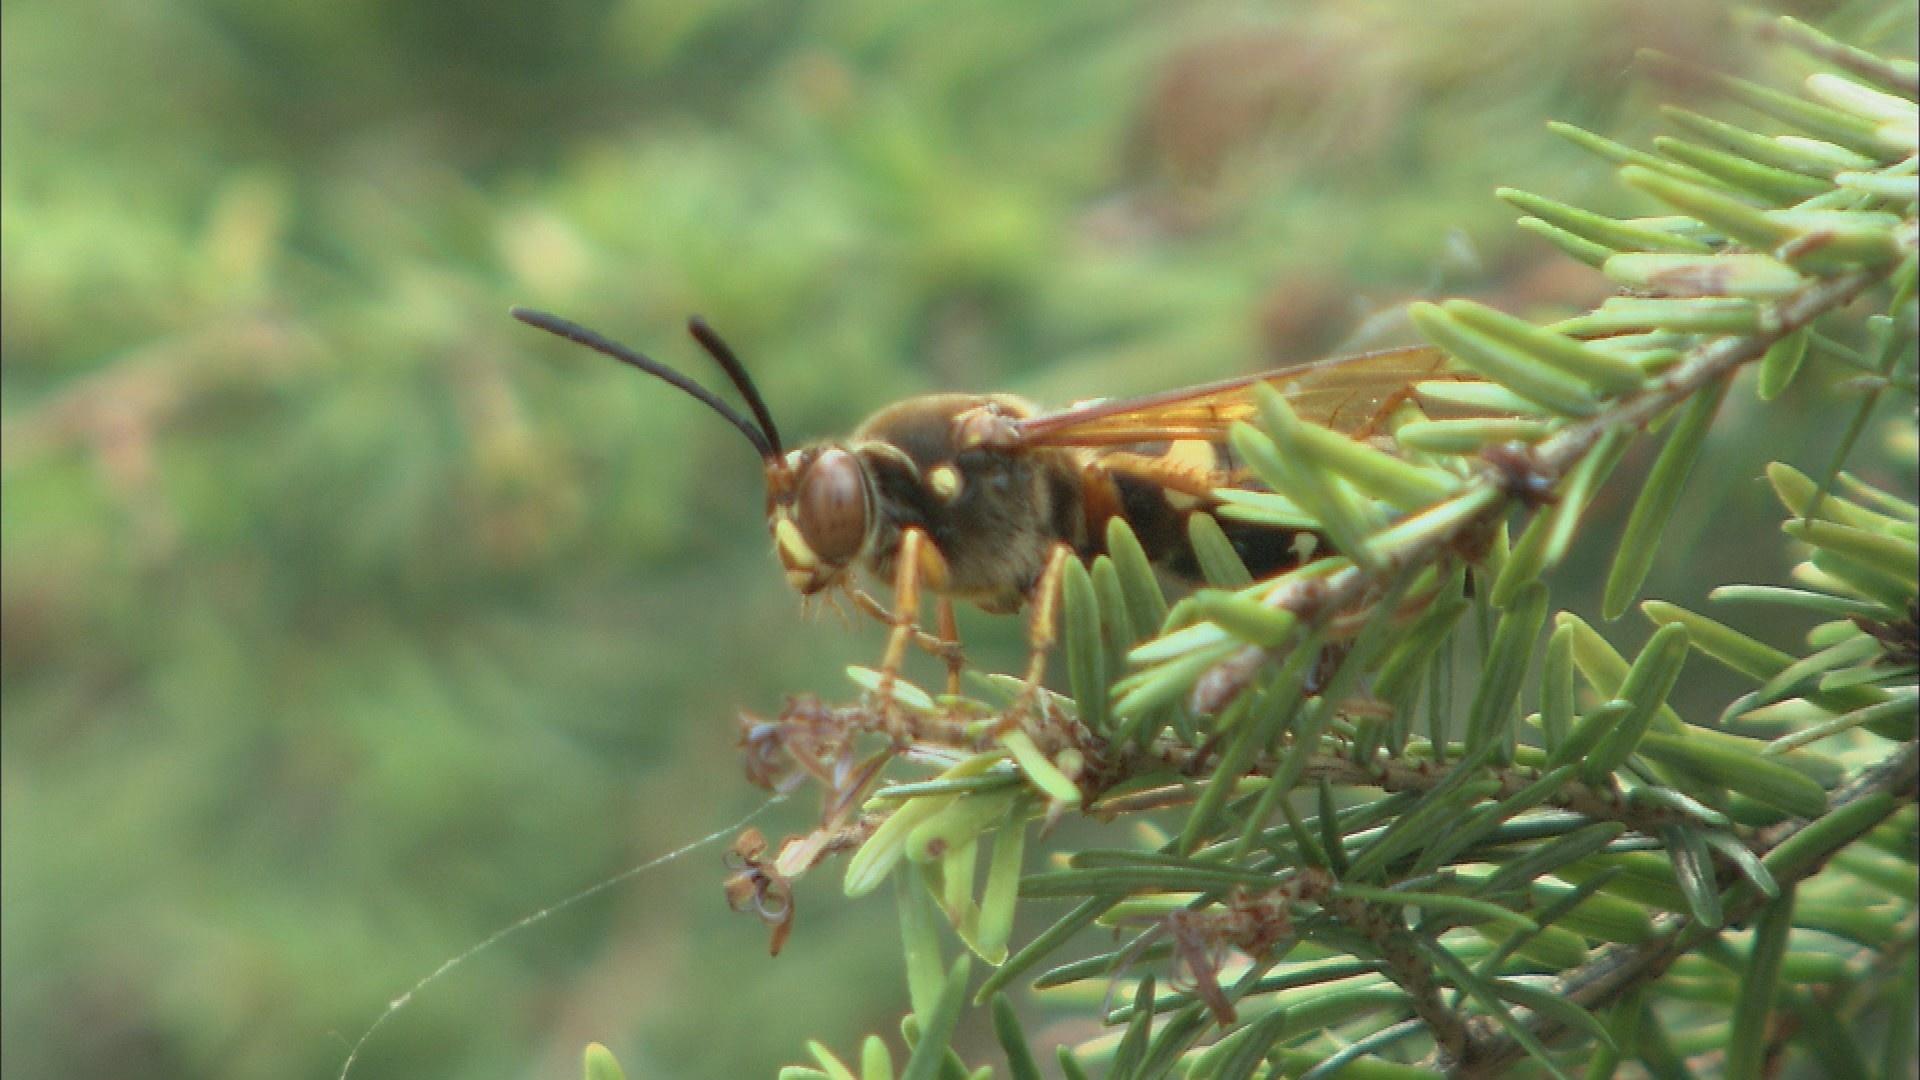 The Wisconsin Gardener. Cicada Killer Giant Wasps. Season 20